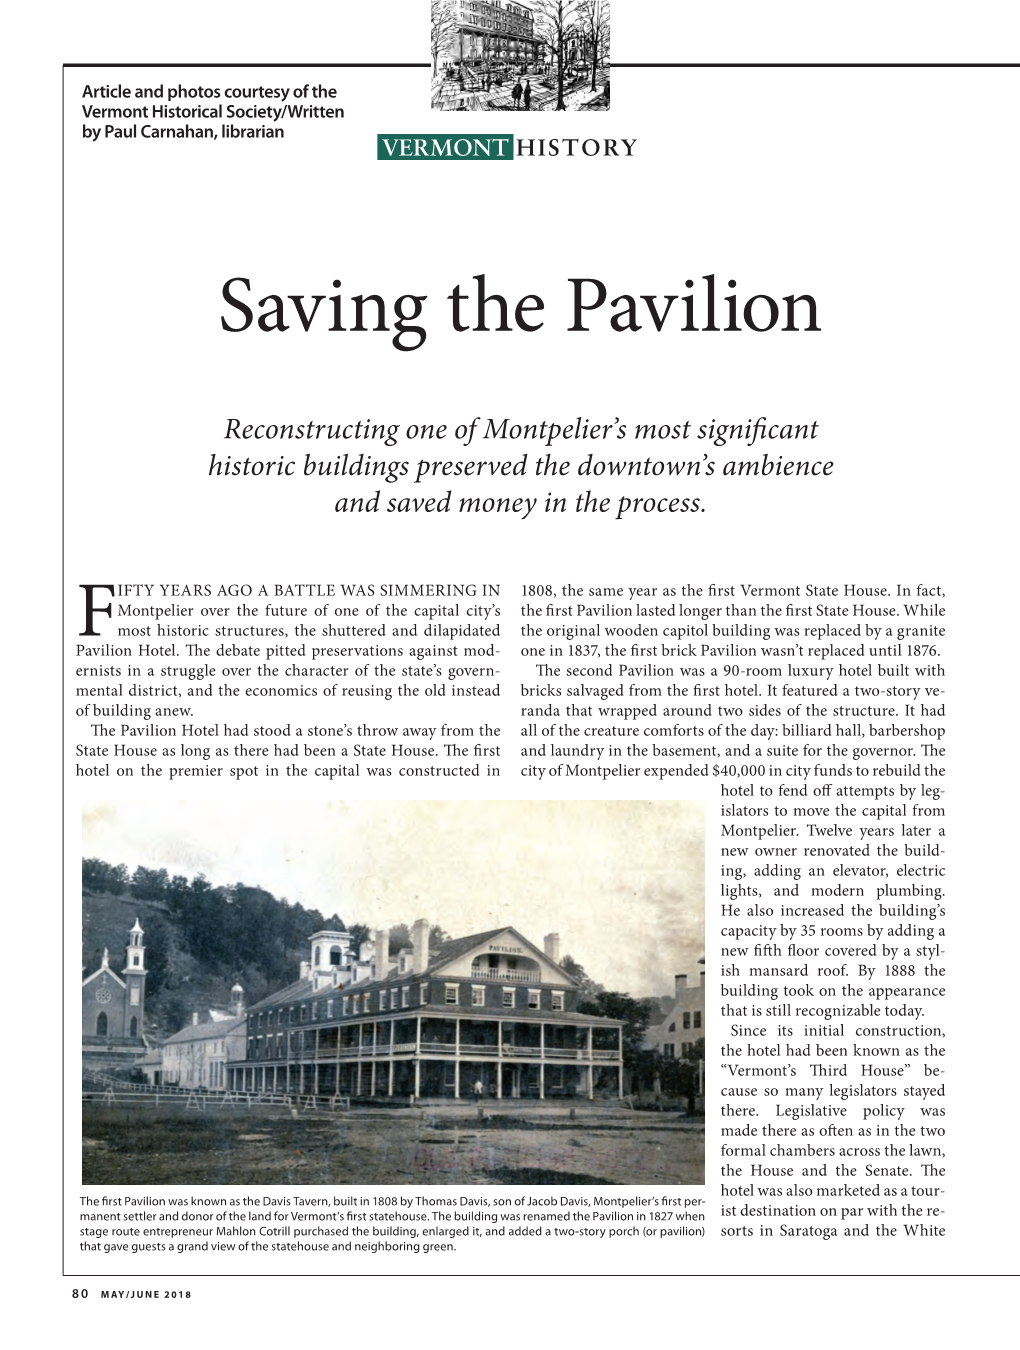 Saving the Pavilion